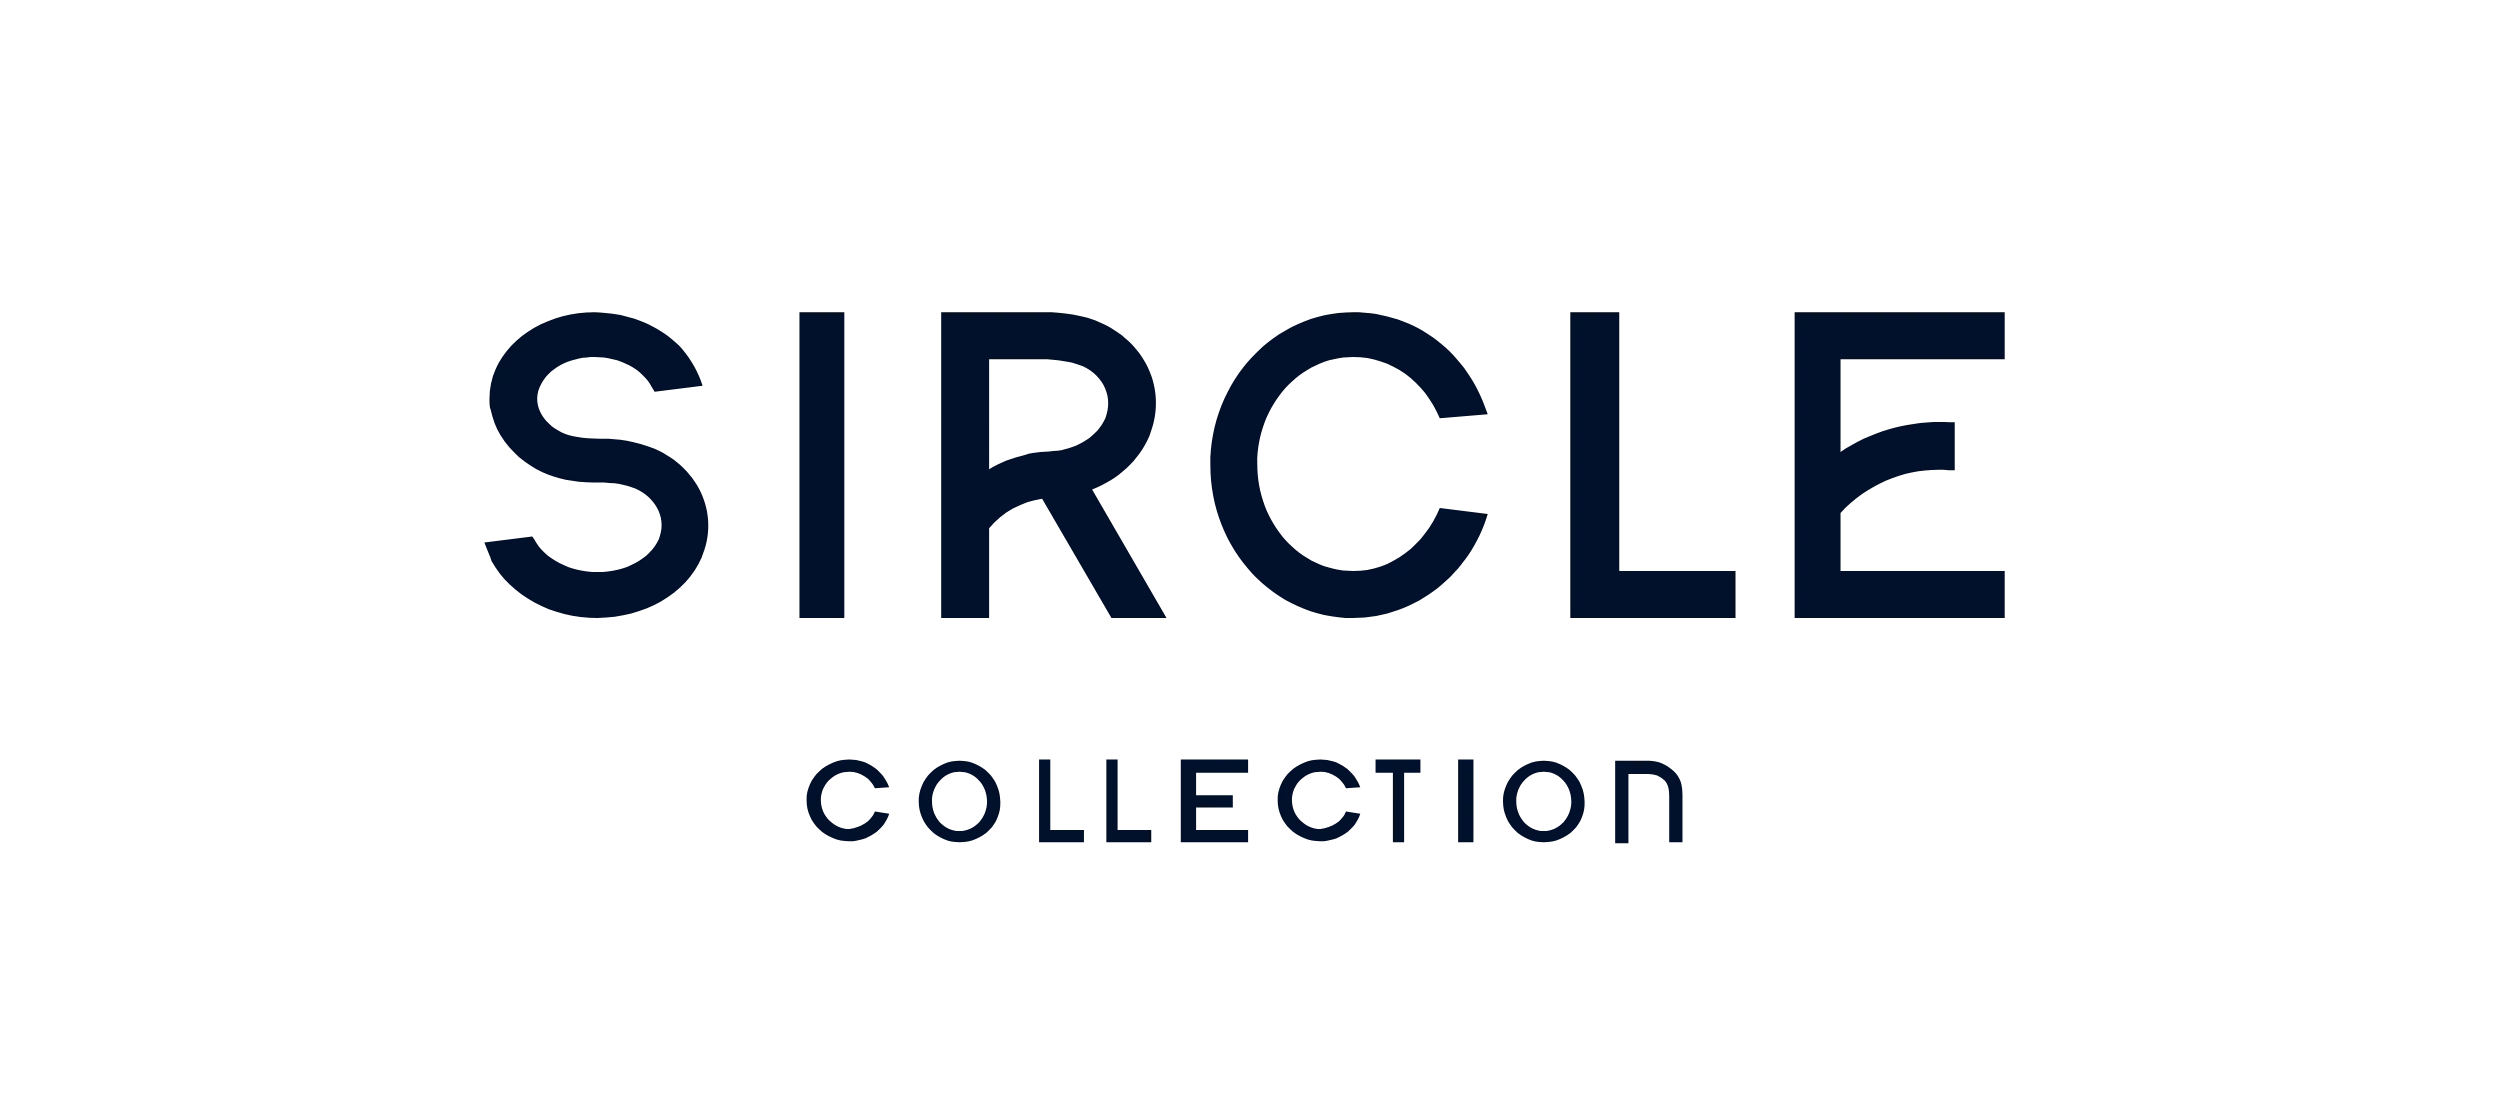 Sircle collection logo